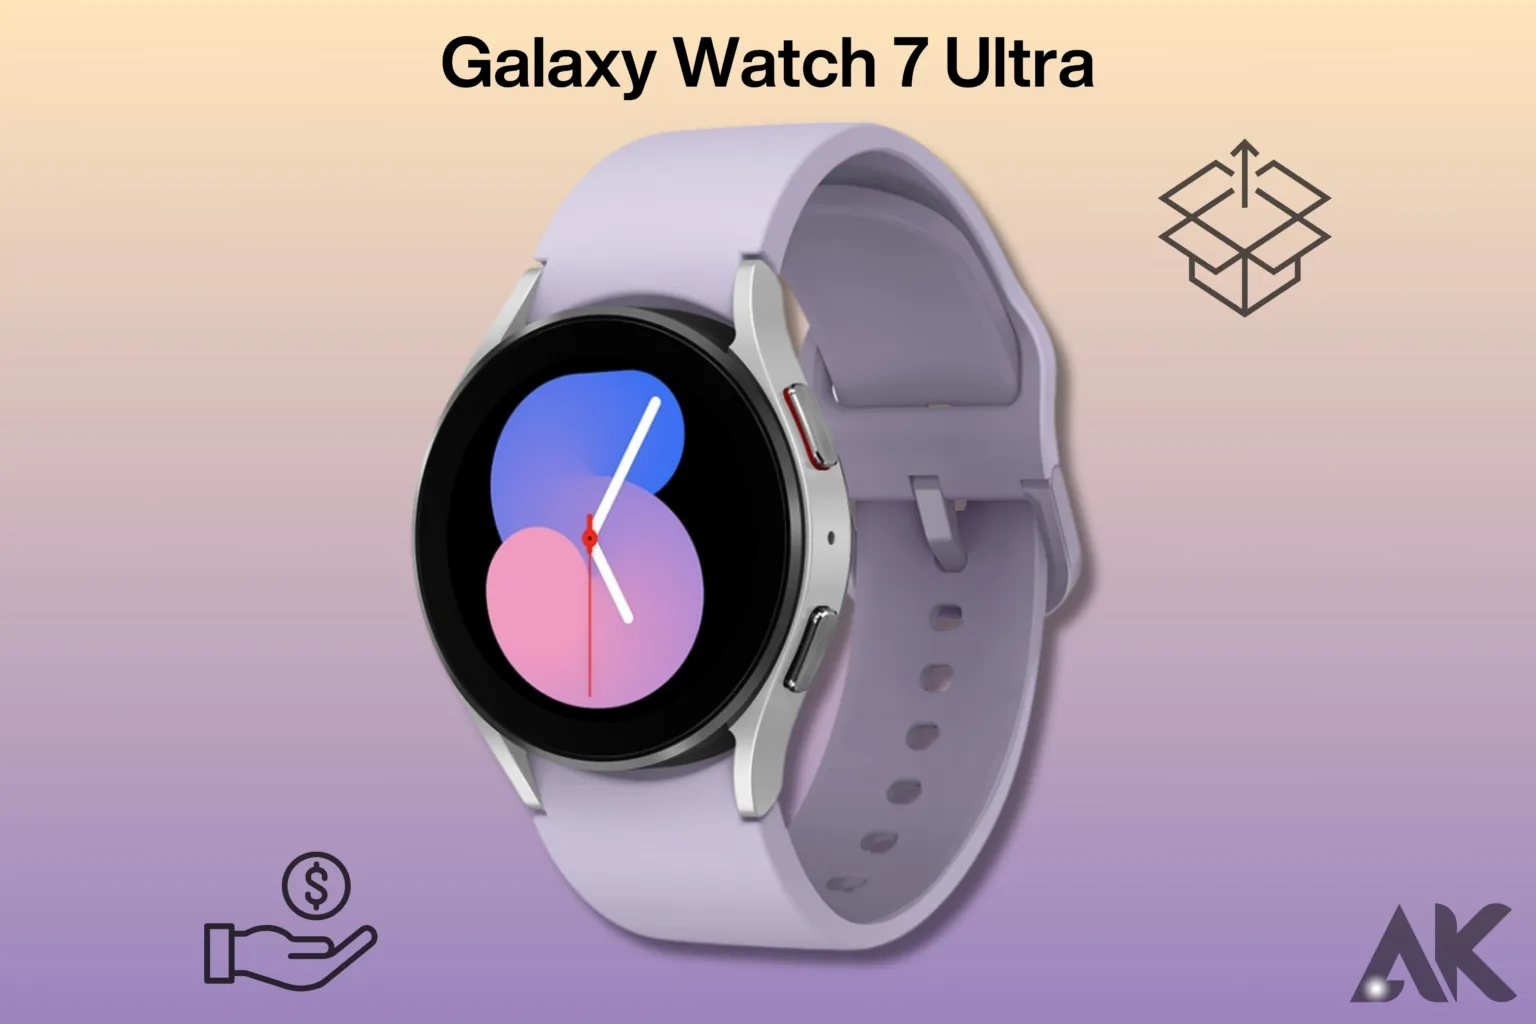 When can I buy Galaxy Watch 7 Ultra